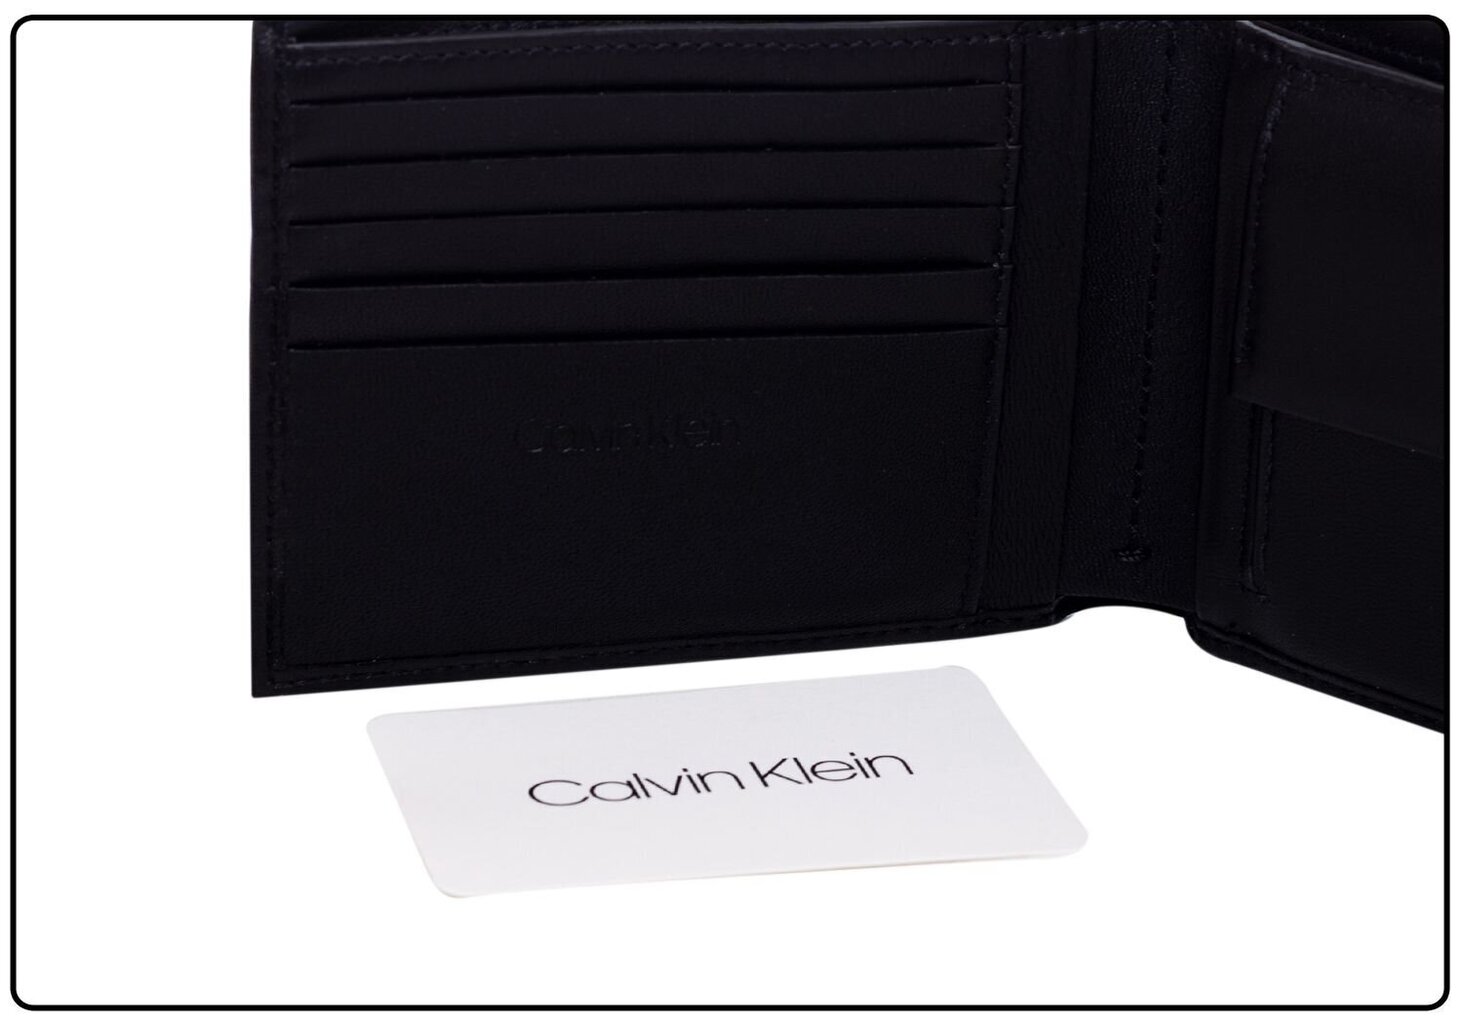 Meeste rahakott Calvin Klein SMOOTH PLAQUE 5 CC BLACK K50K504299 001 35821 hind ja info | Meeste rahakotid | kaup24.ee